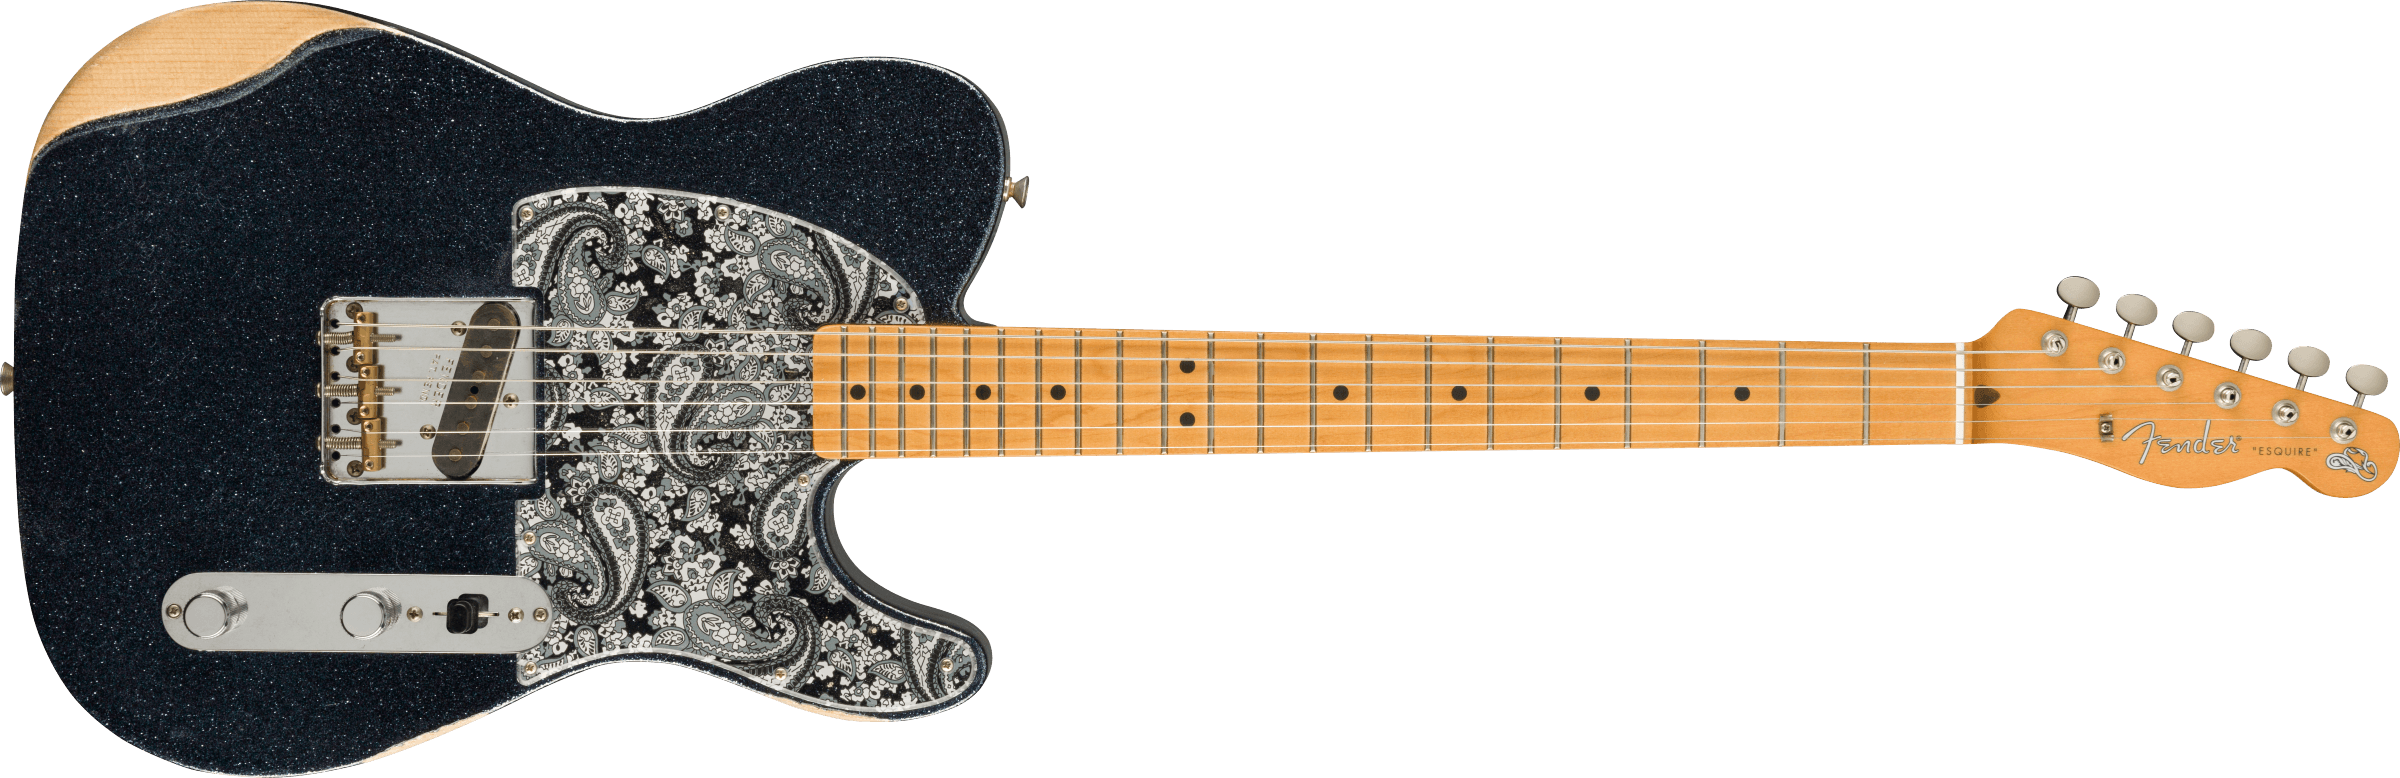 Fender® Brad Paisley Esquire®, Maple, Black Sparkle